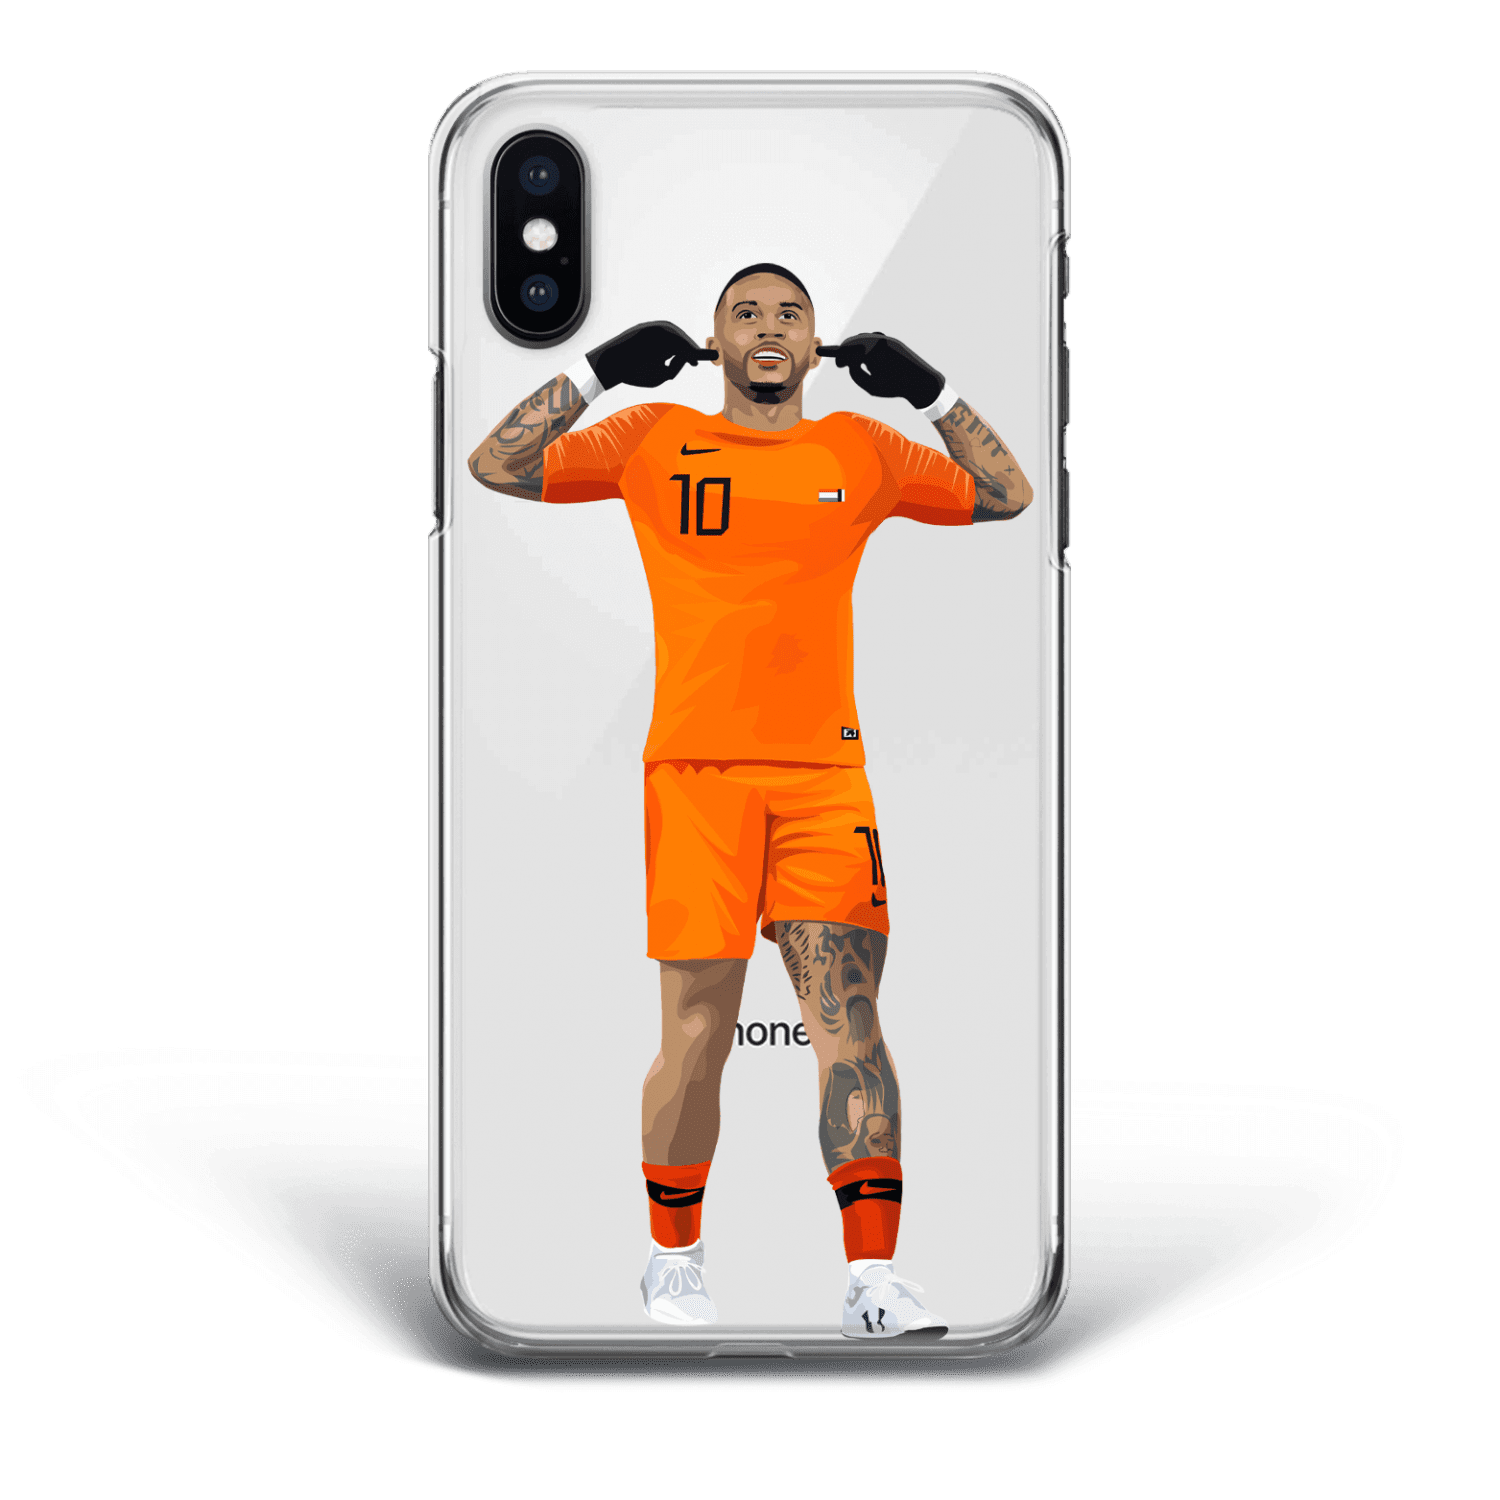 Memphis Depay scores for Netherlands national team - Phone case